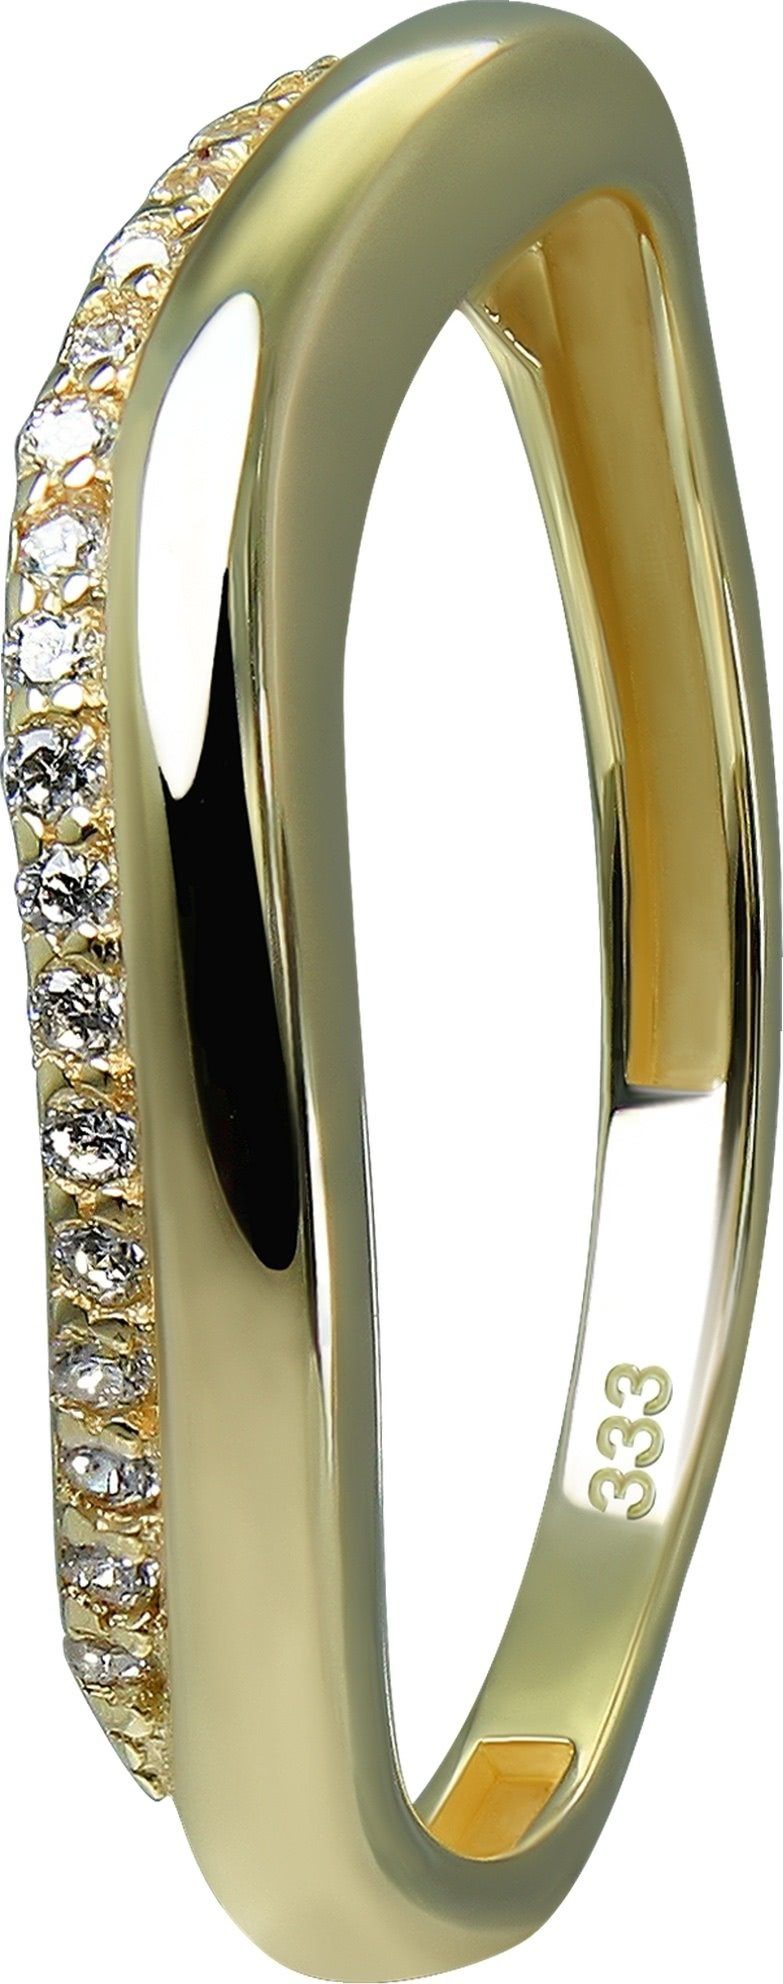 GoldDream Goldring GoldDream Gold Ring Welle Gr.58 Zirkonia (Fingerring), Damen Ring Welle 333 Gelbgold - 8 Karat, Farbe: gold, weiß